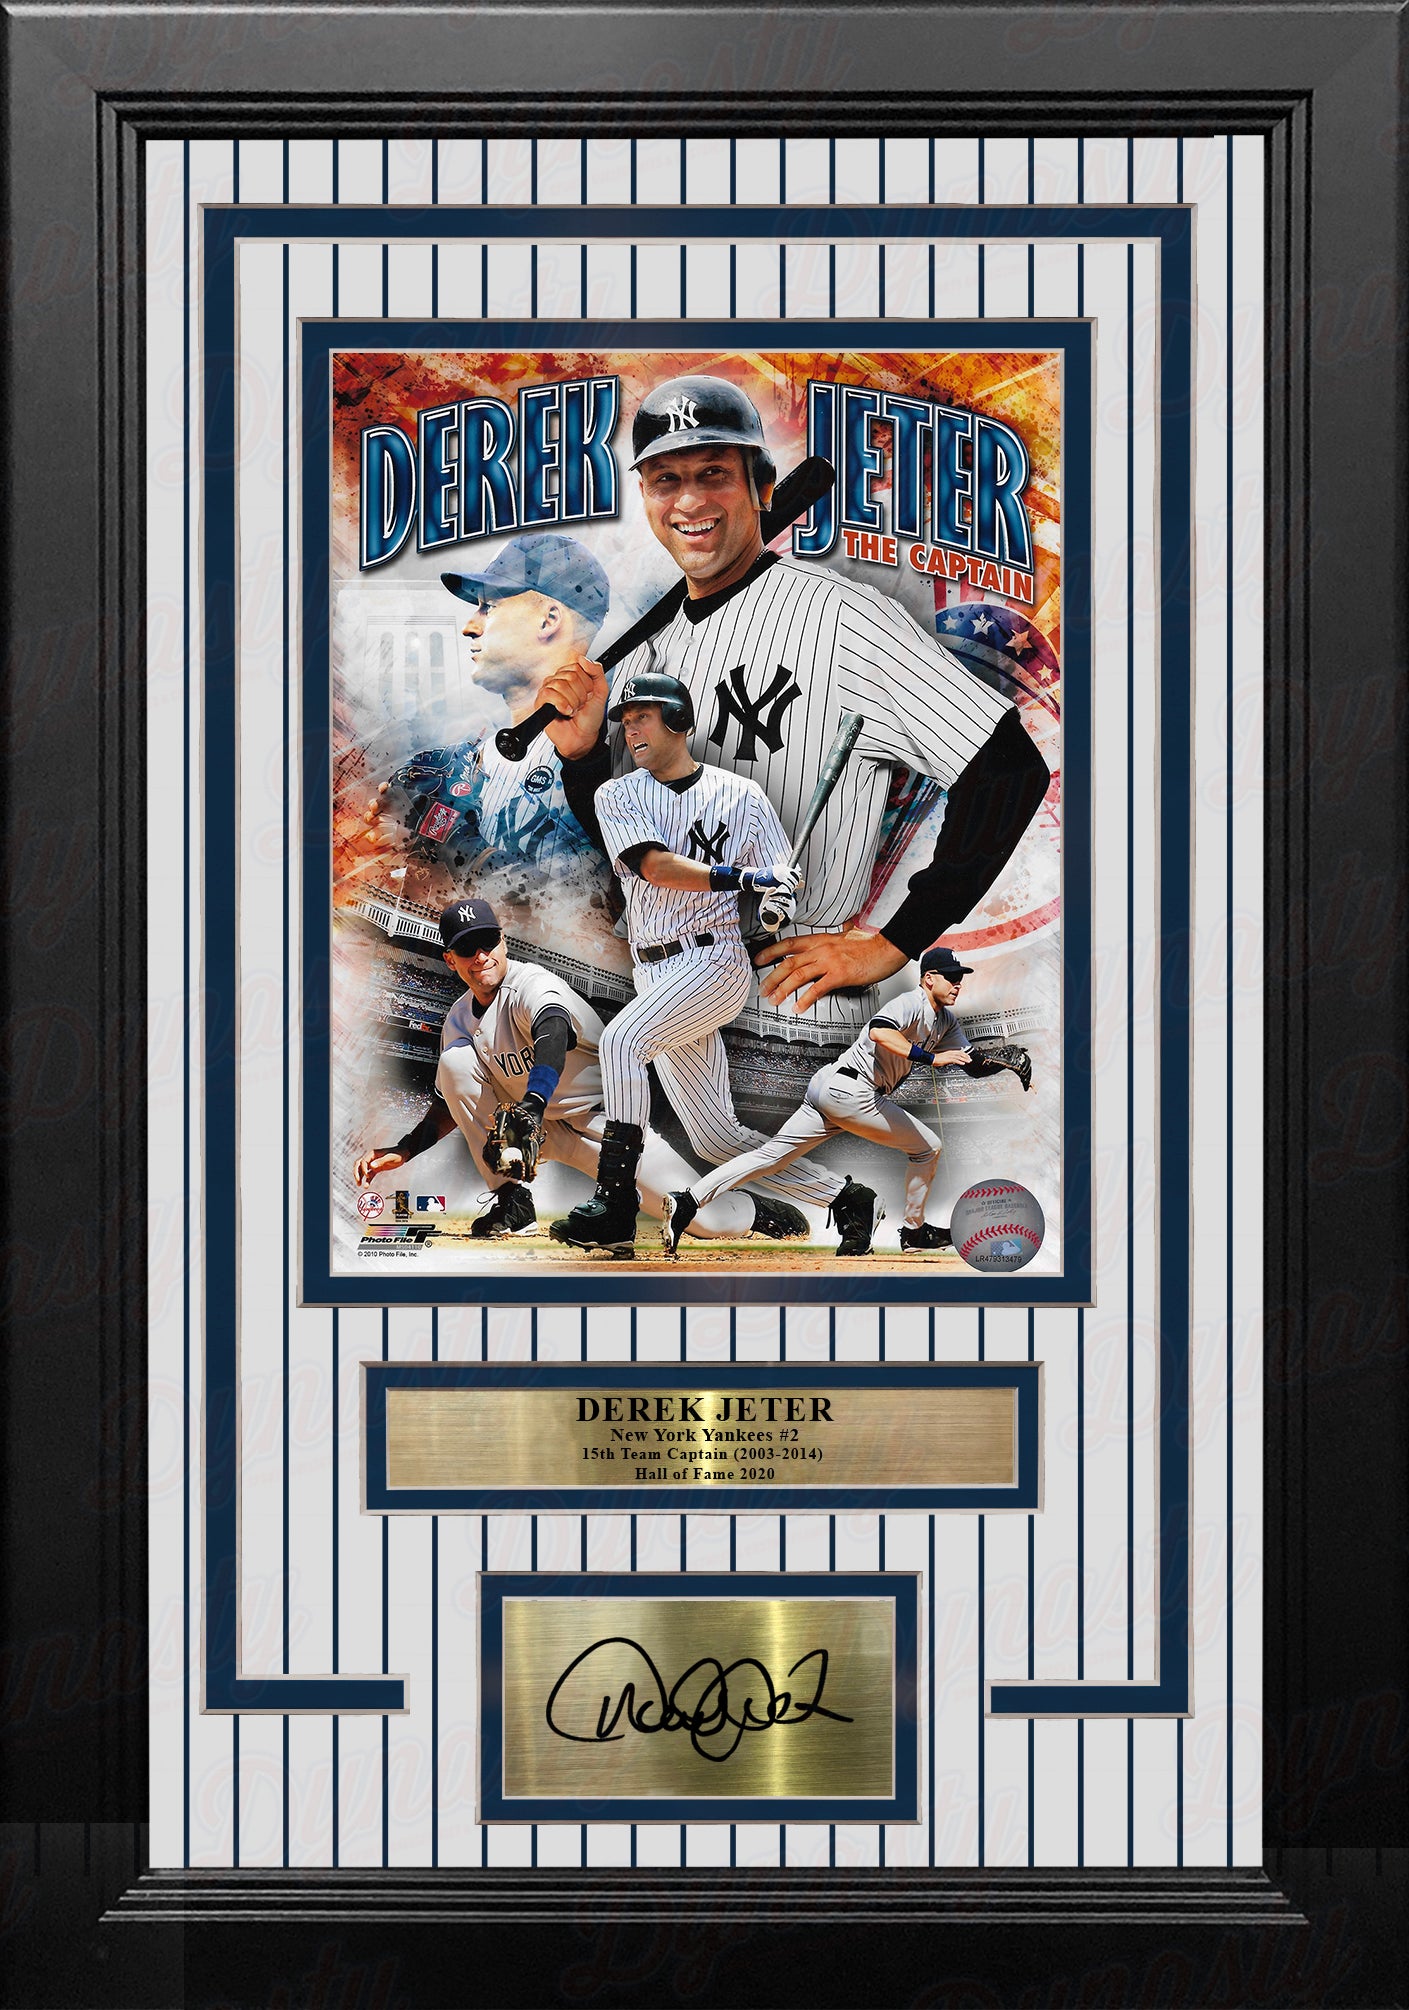 Legends Never Die New York Yankee Derek Jeter 3000th Hit Collectible |  Framed Photo Collage Wall Art Decor, 11x14-Inch, (11100U)